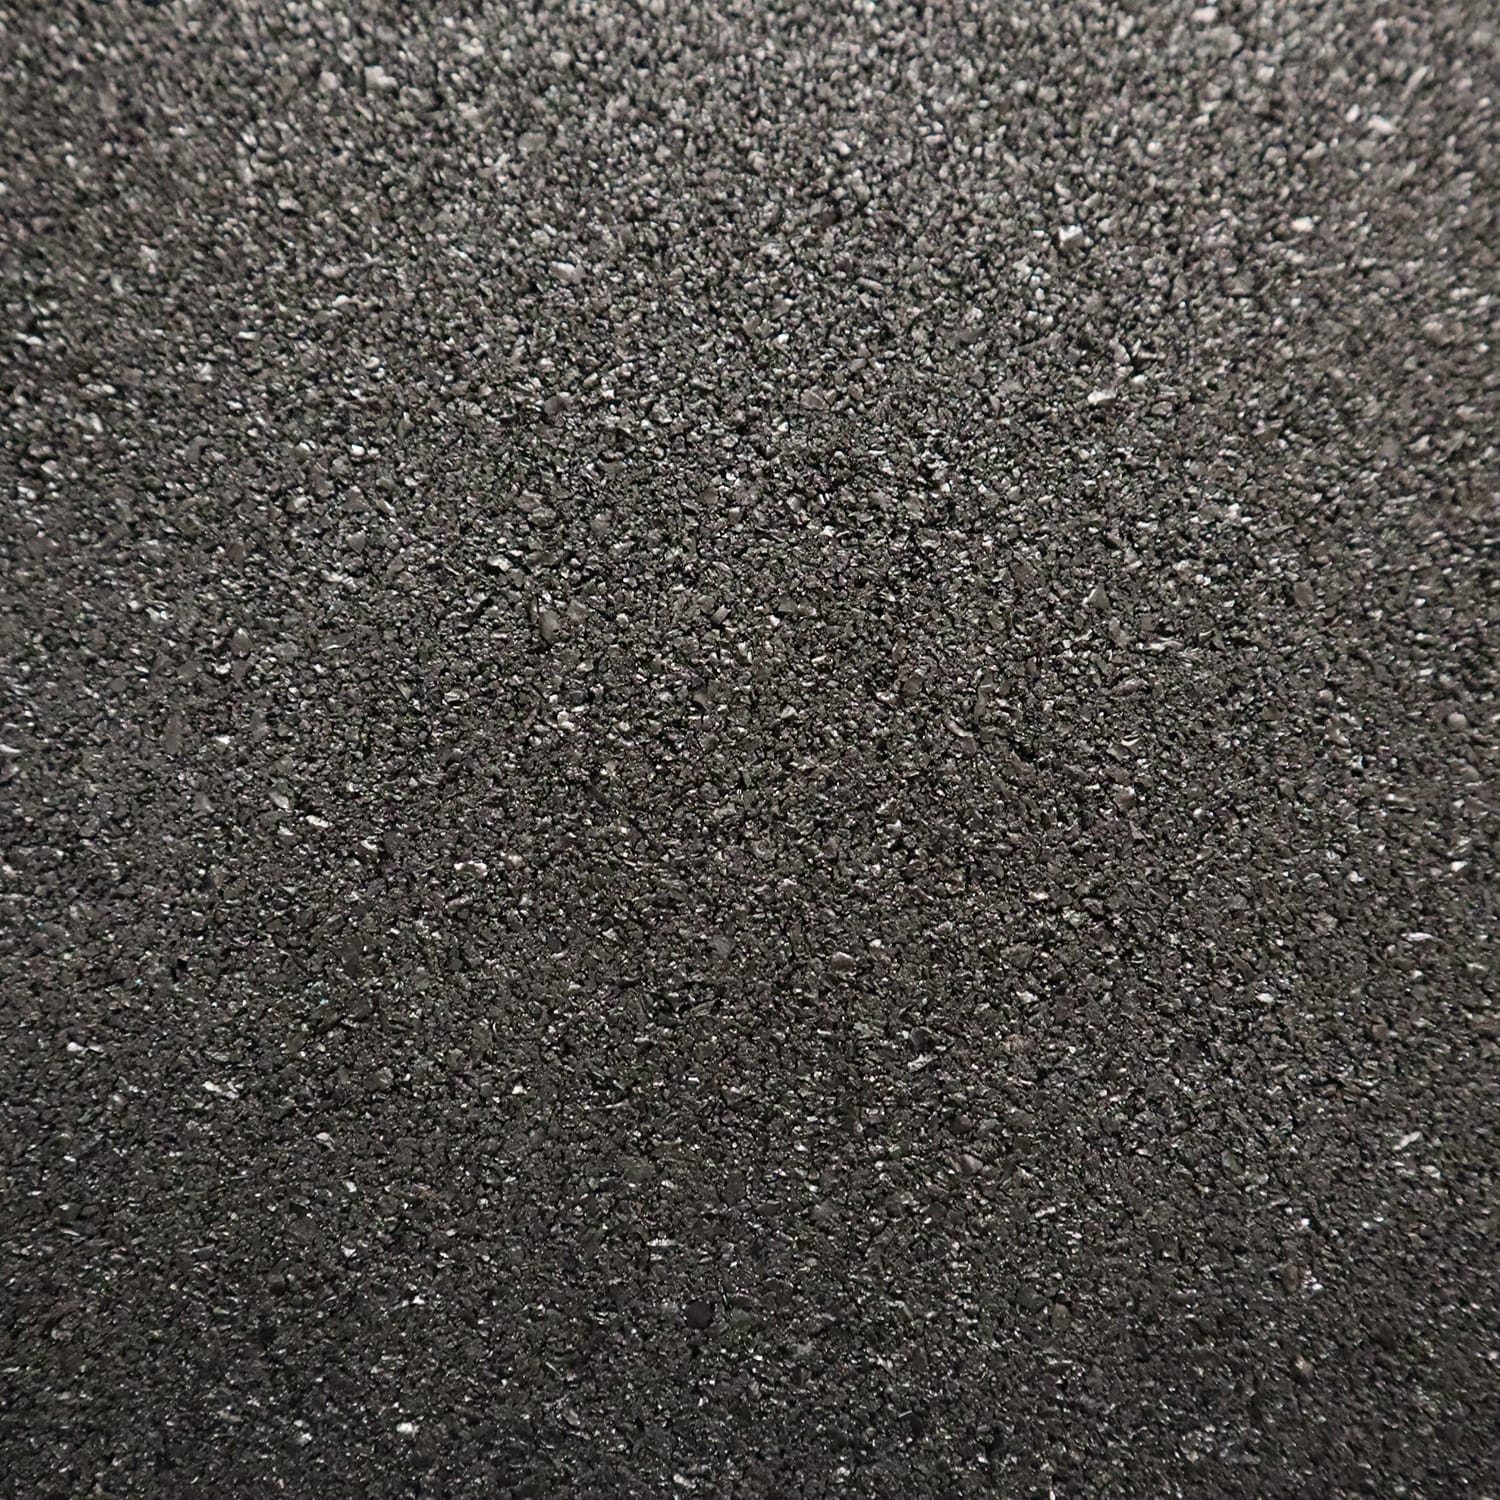 Multi-Purpose Interlocking Rubber Mats 20″x20″x1/4″ Black (6packs with 10  EDGE) – RevTime